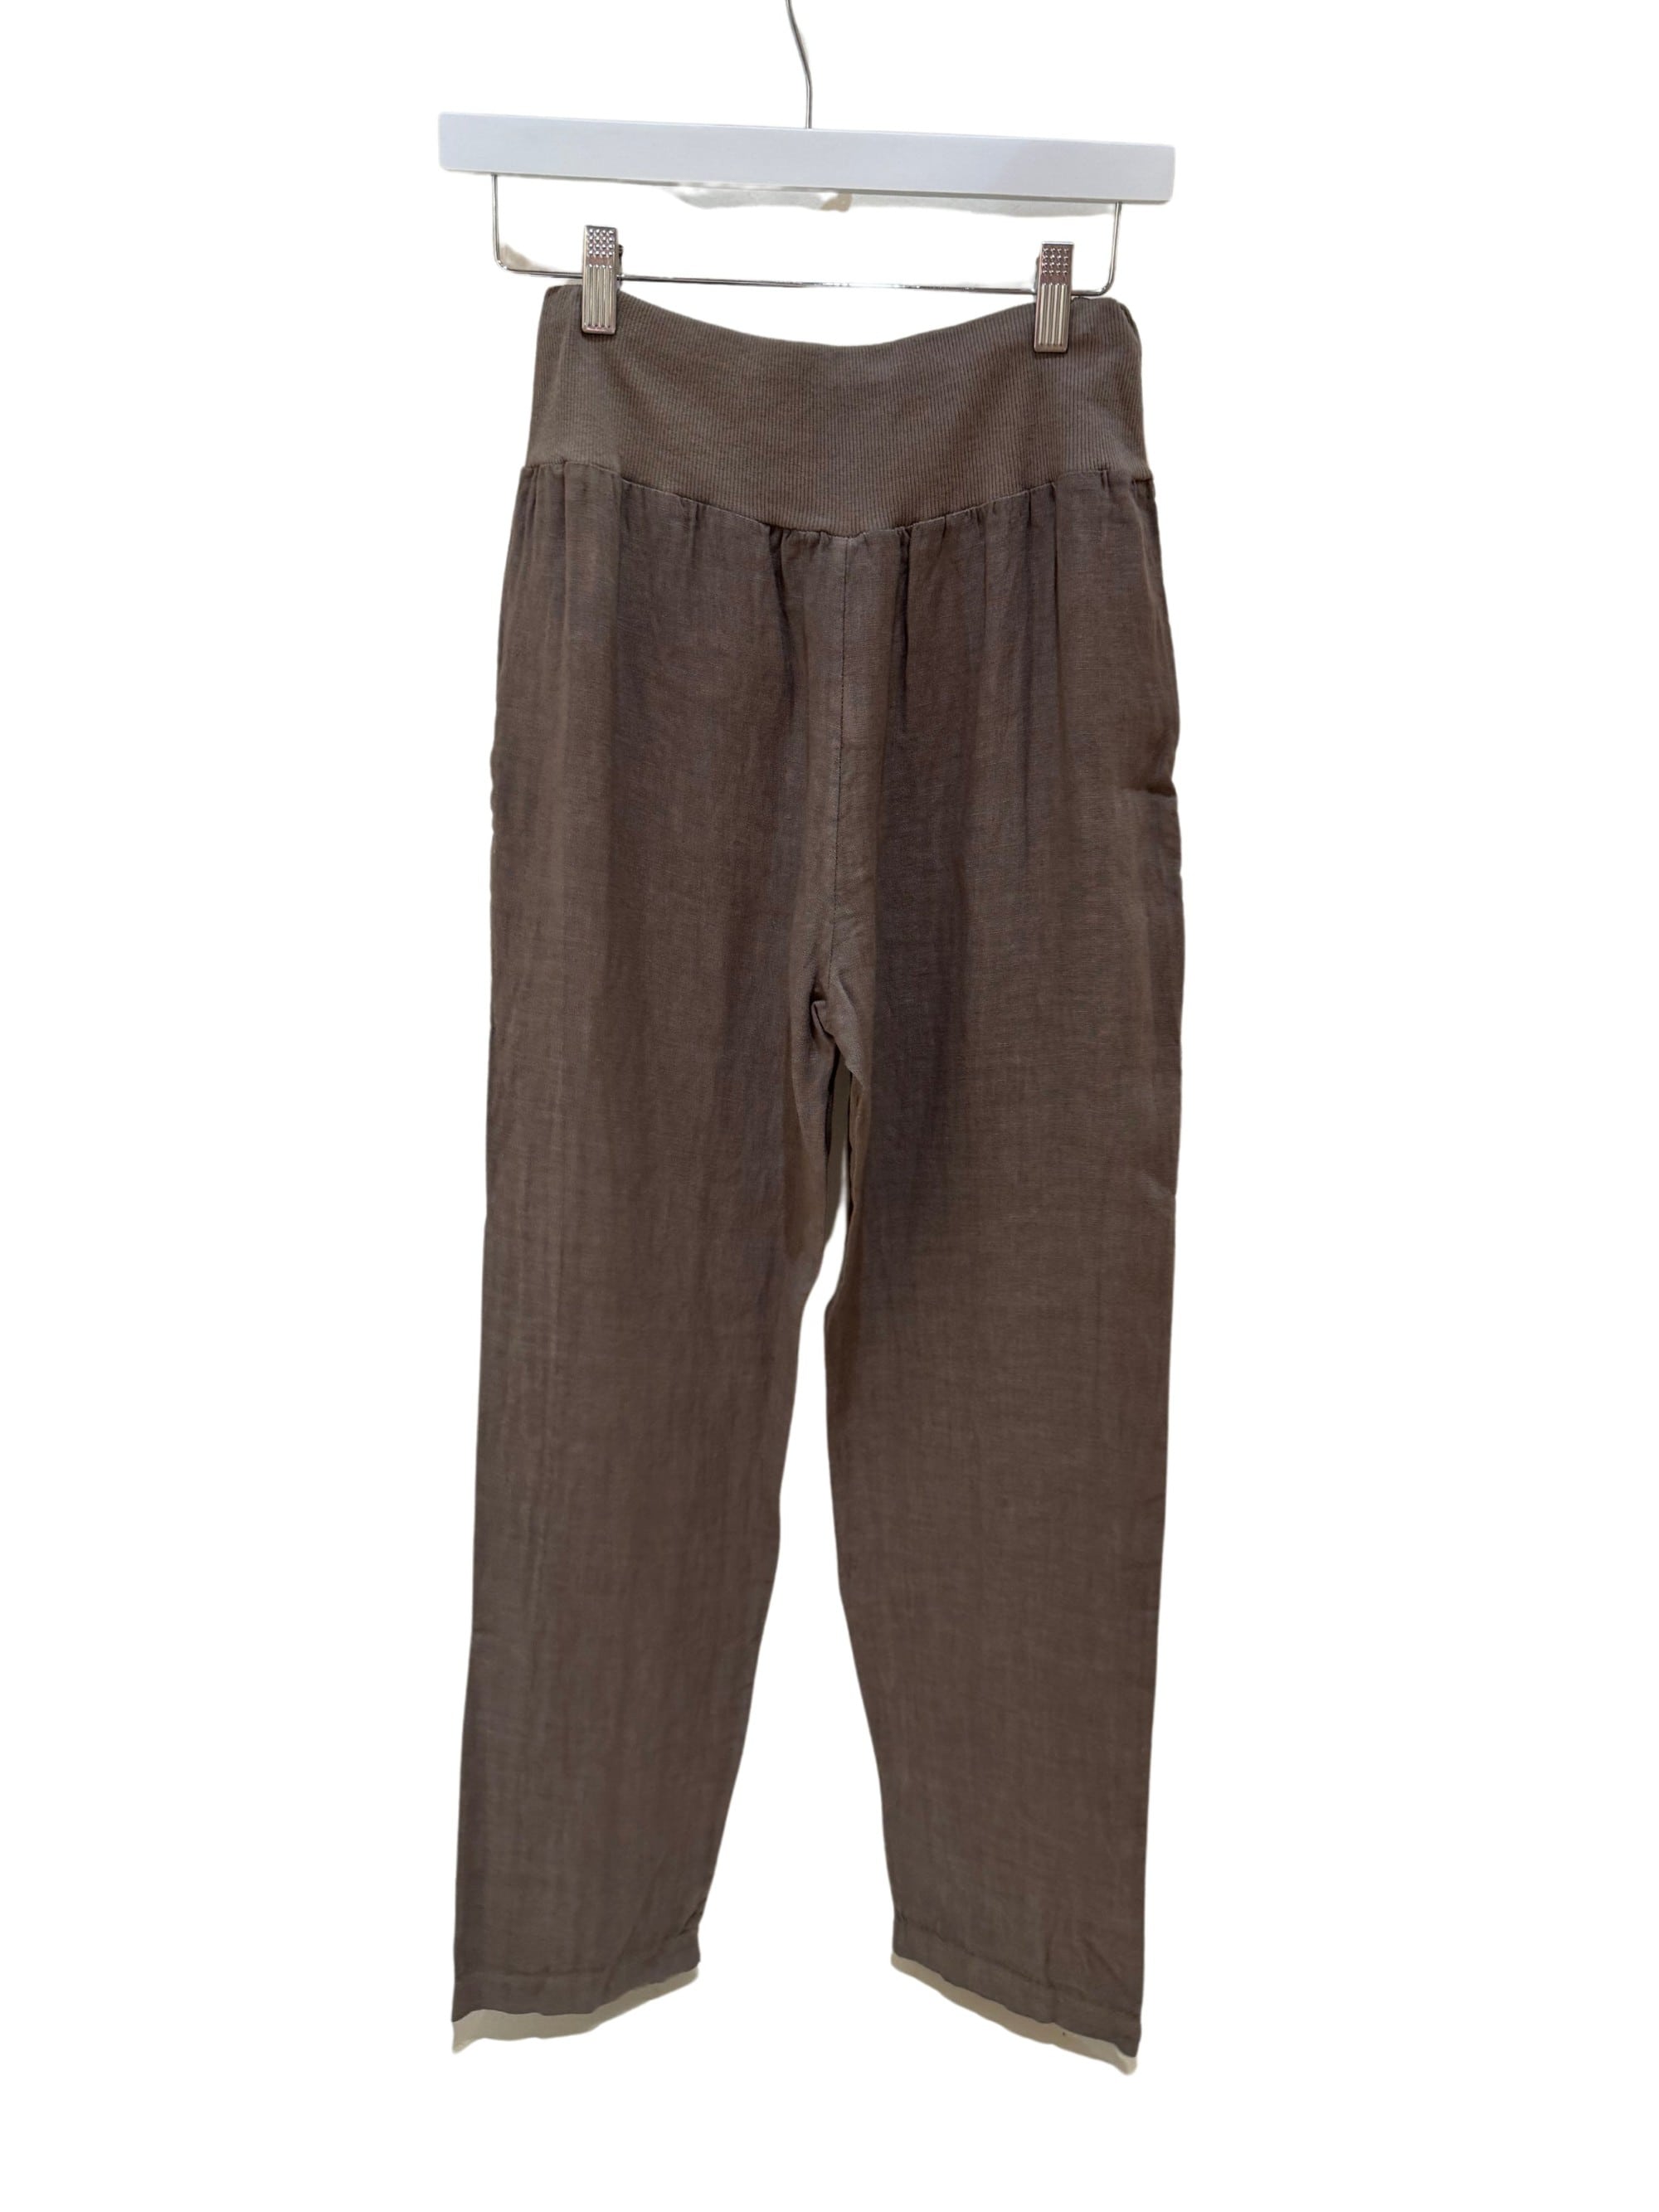 Inizio Linen Pants in Brown 